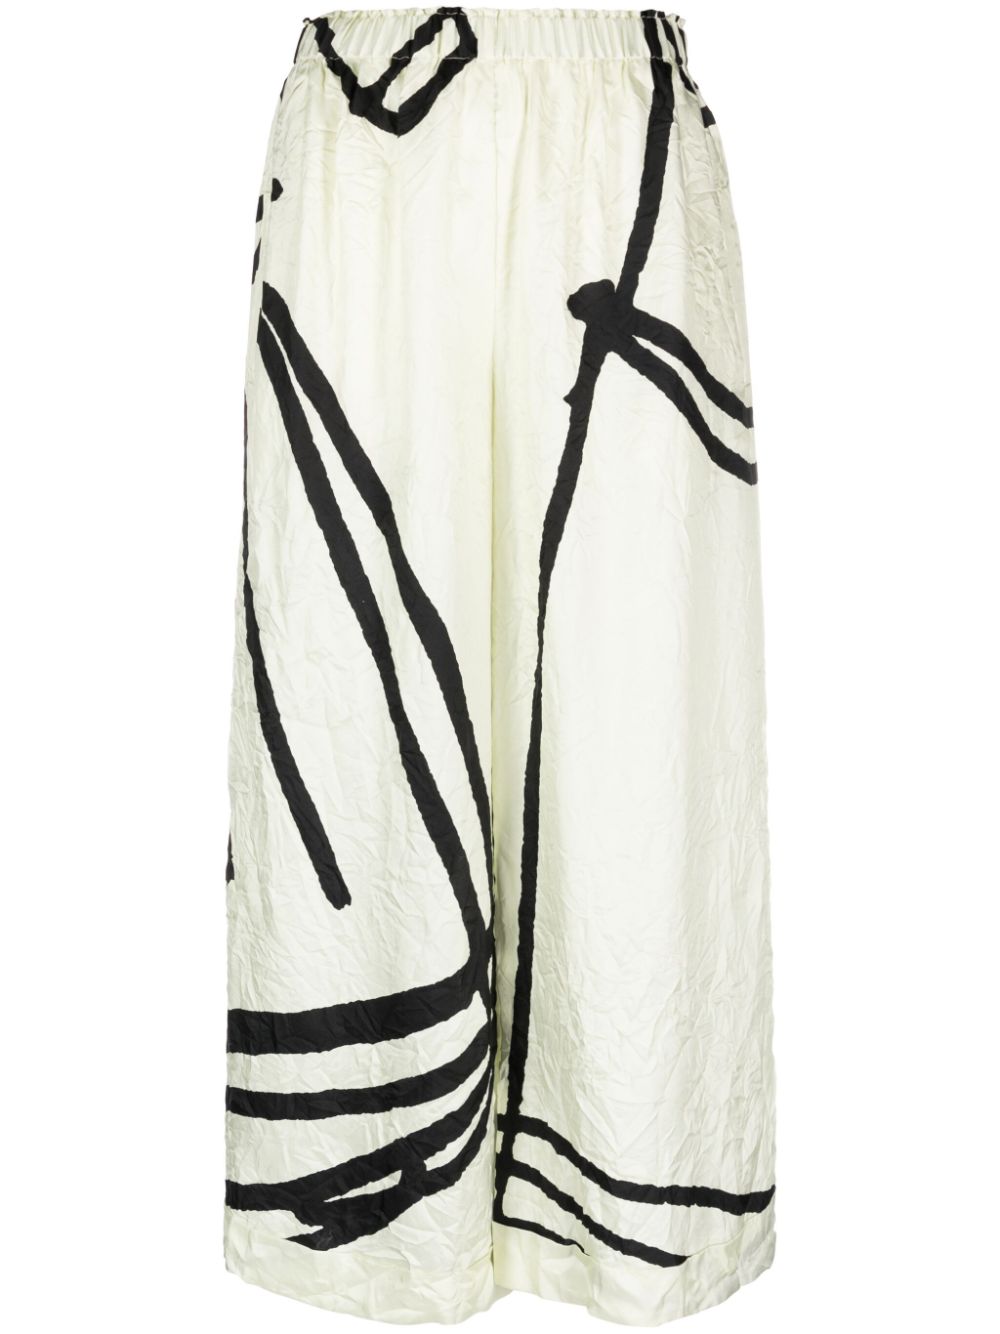 DANIELA GREGIS Ivory High-Waisted Printed Silk Trousers for Women